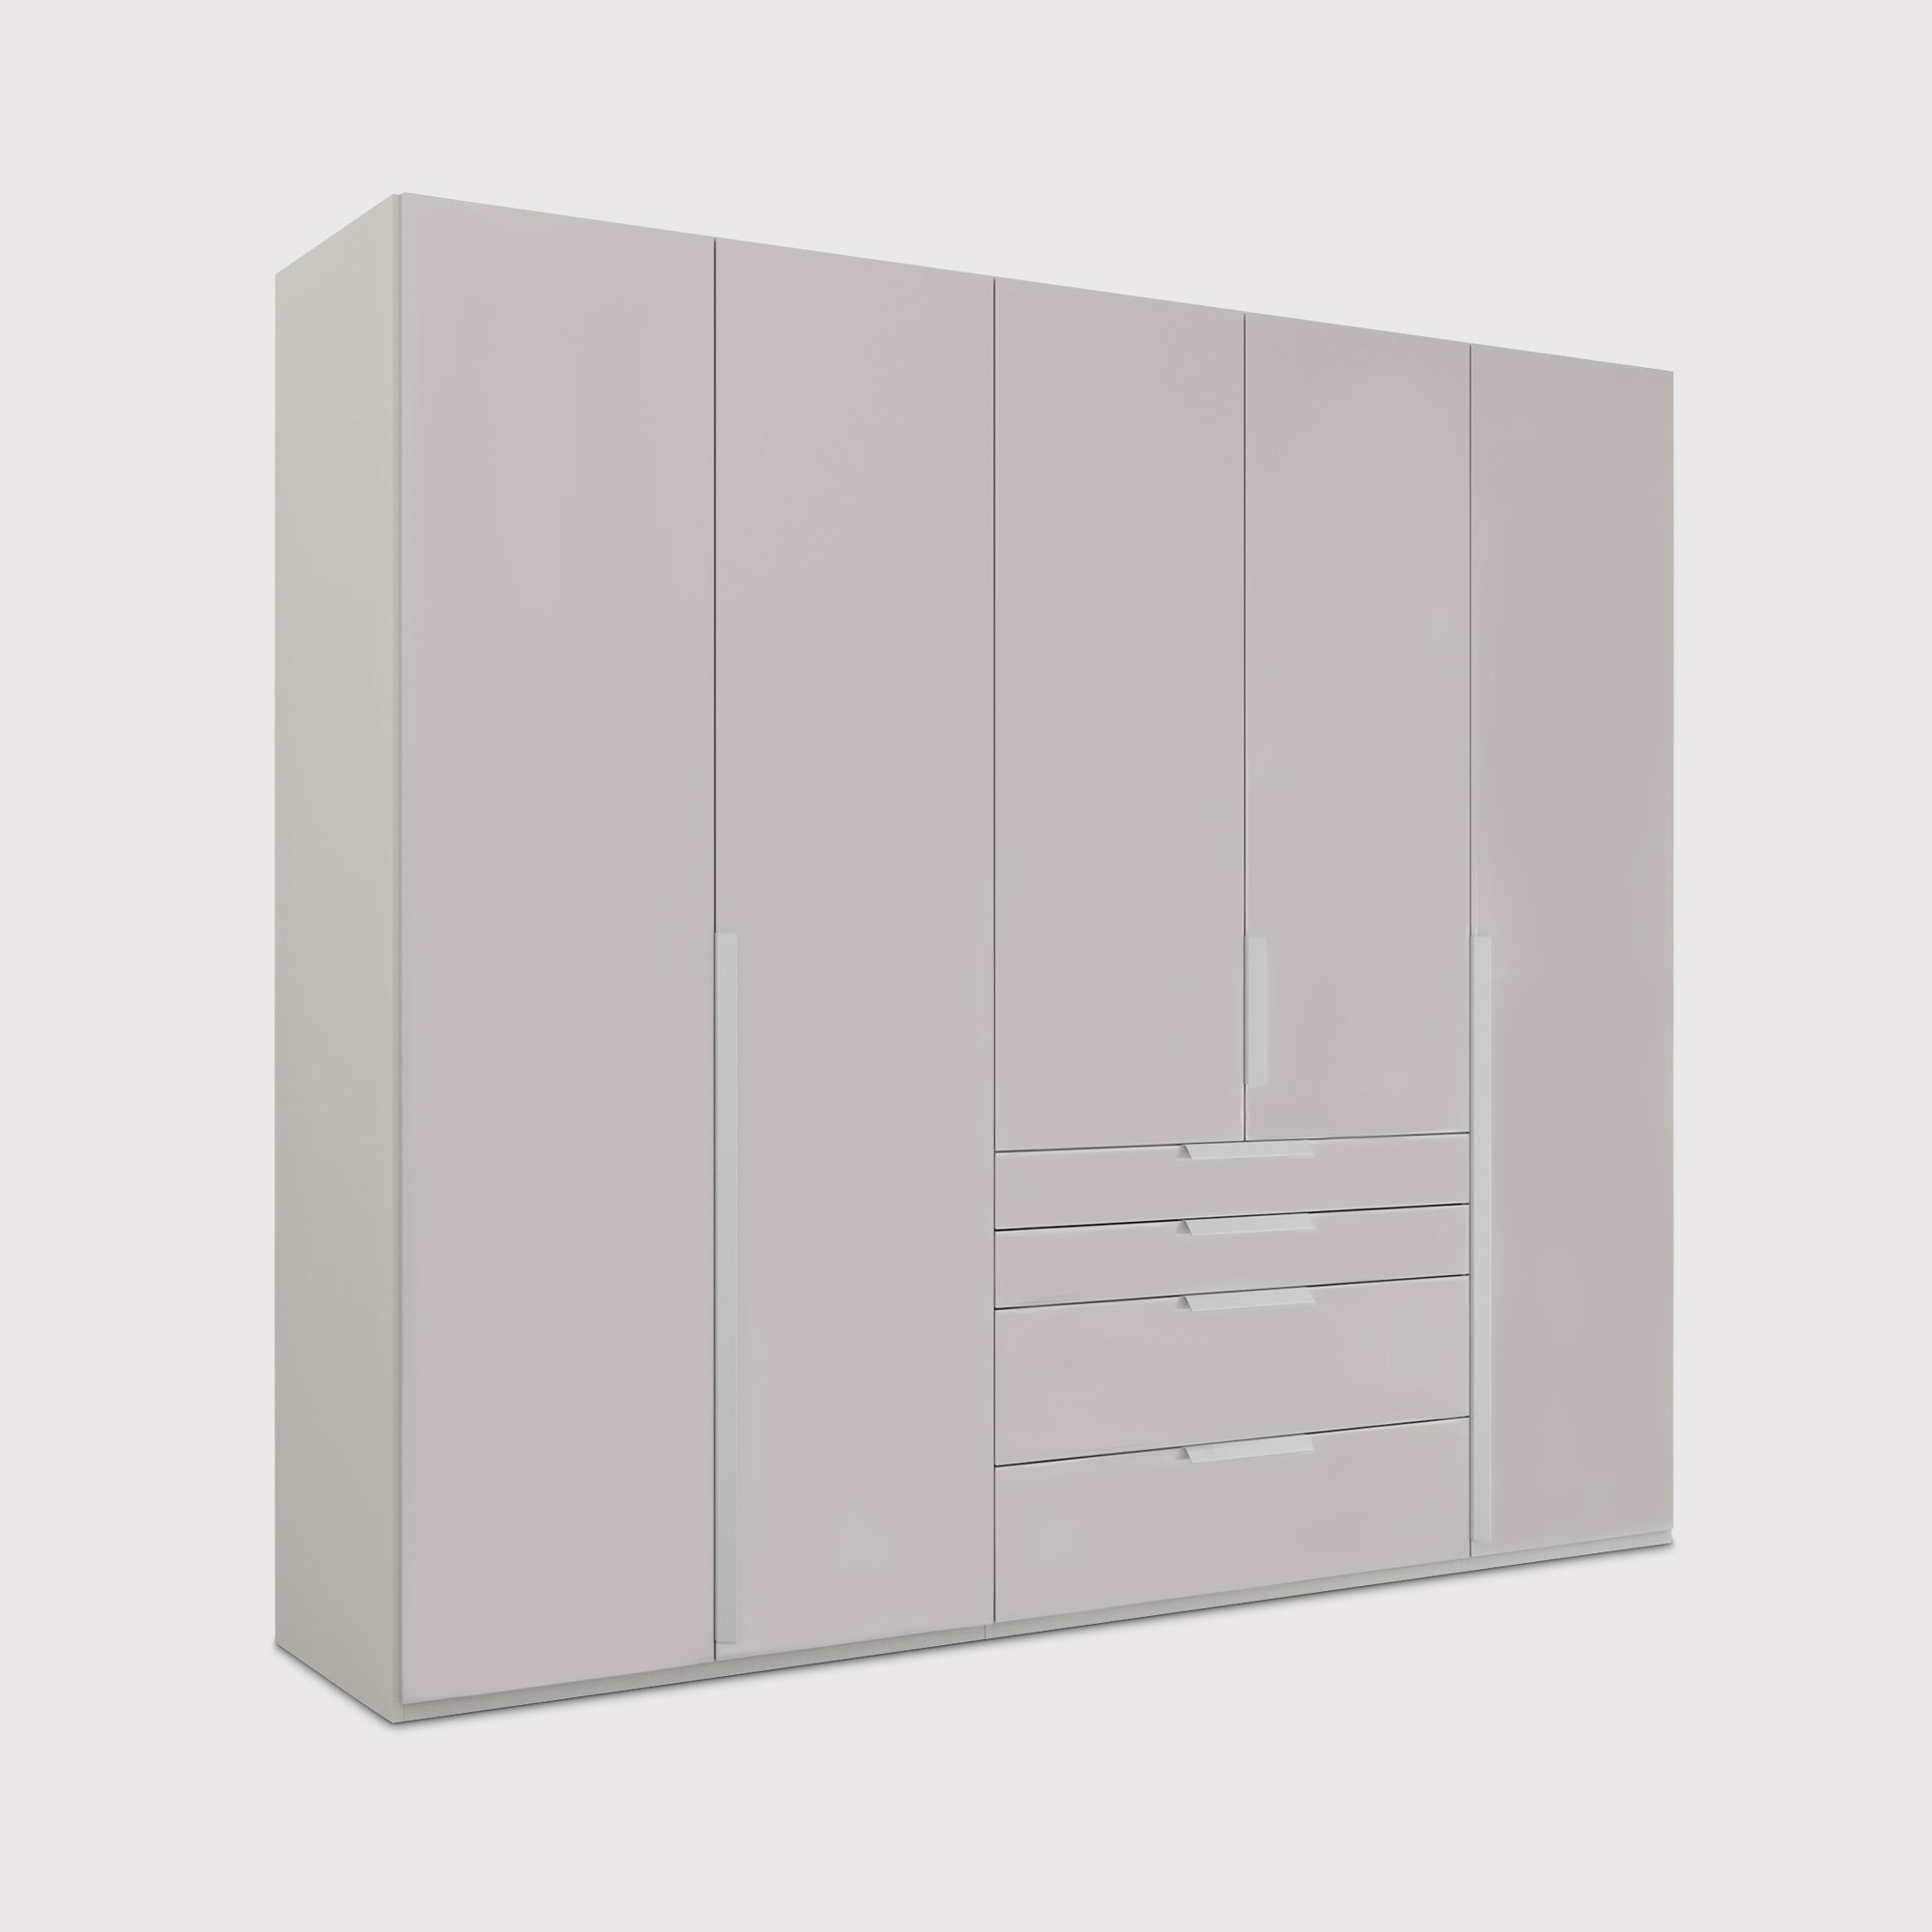 Frans 5 Door 4 Drawer Wardrobe 251cm, Grey | Barker & Stonehouse